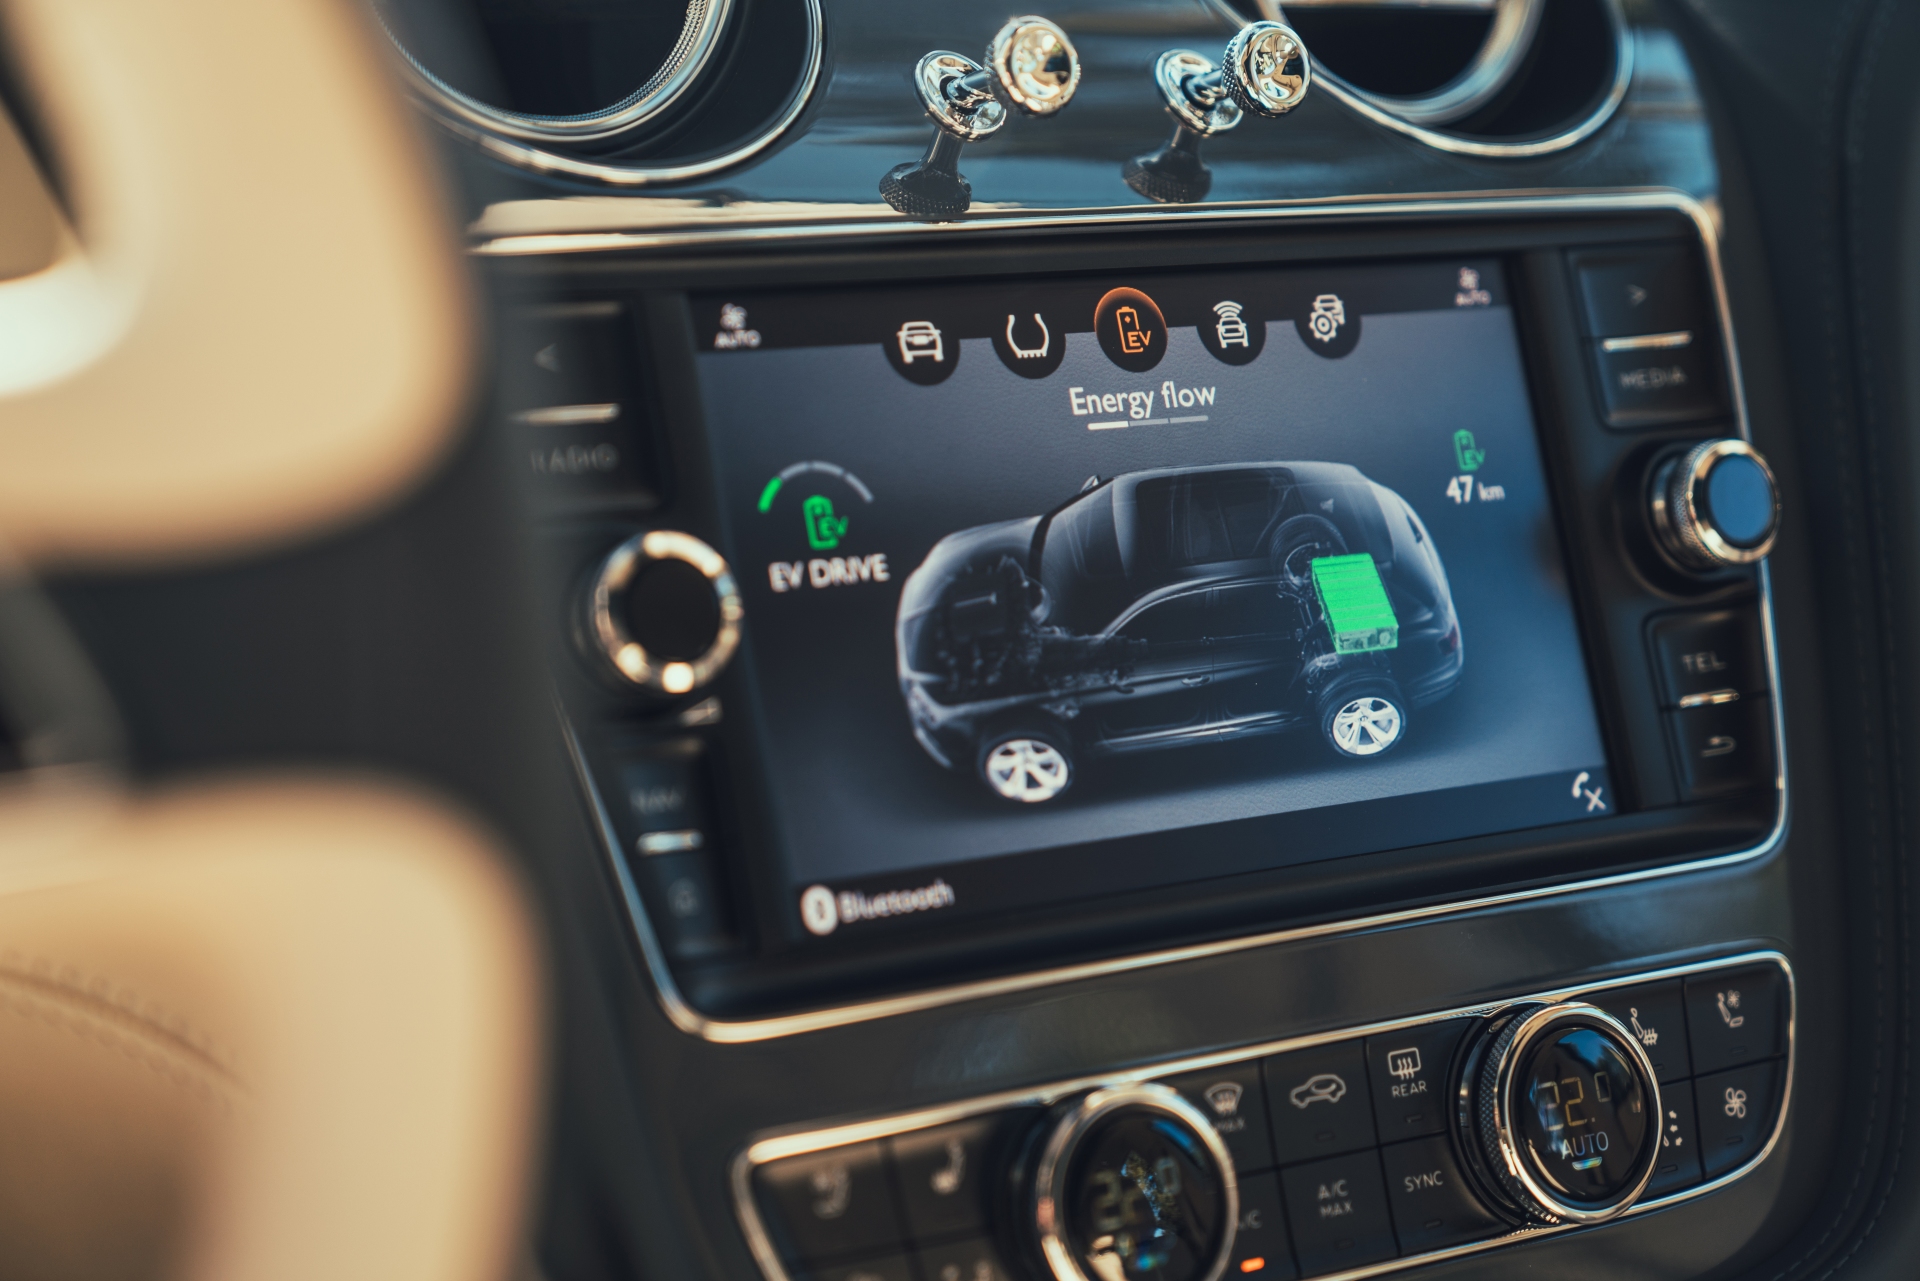 2019 Bentley Bentayga Hybrid - Infotainment Screen